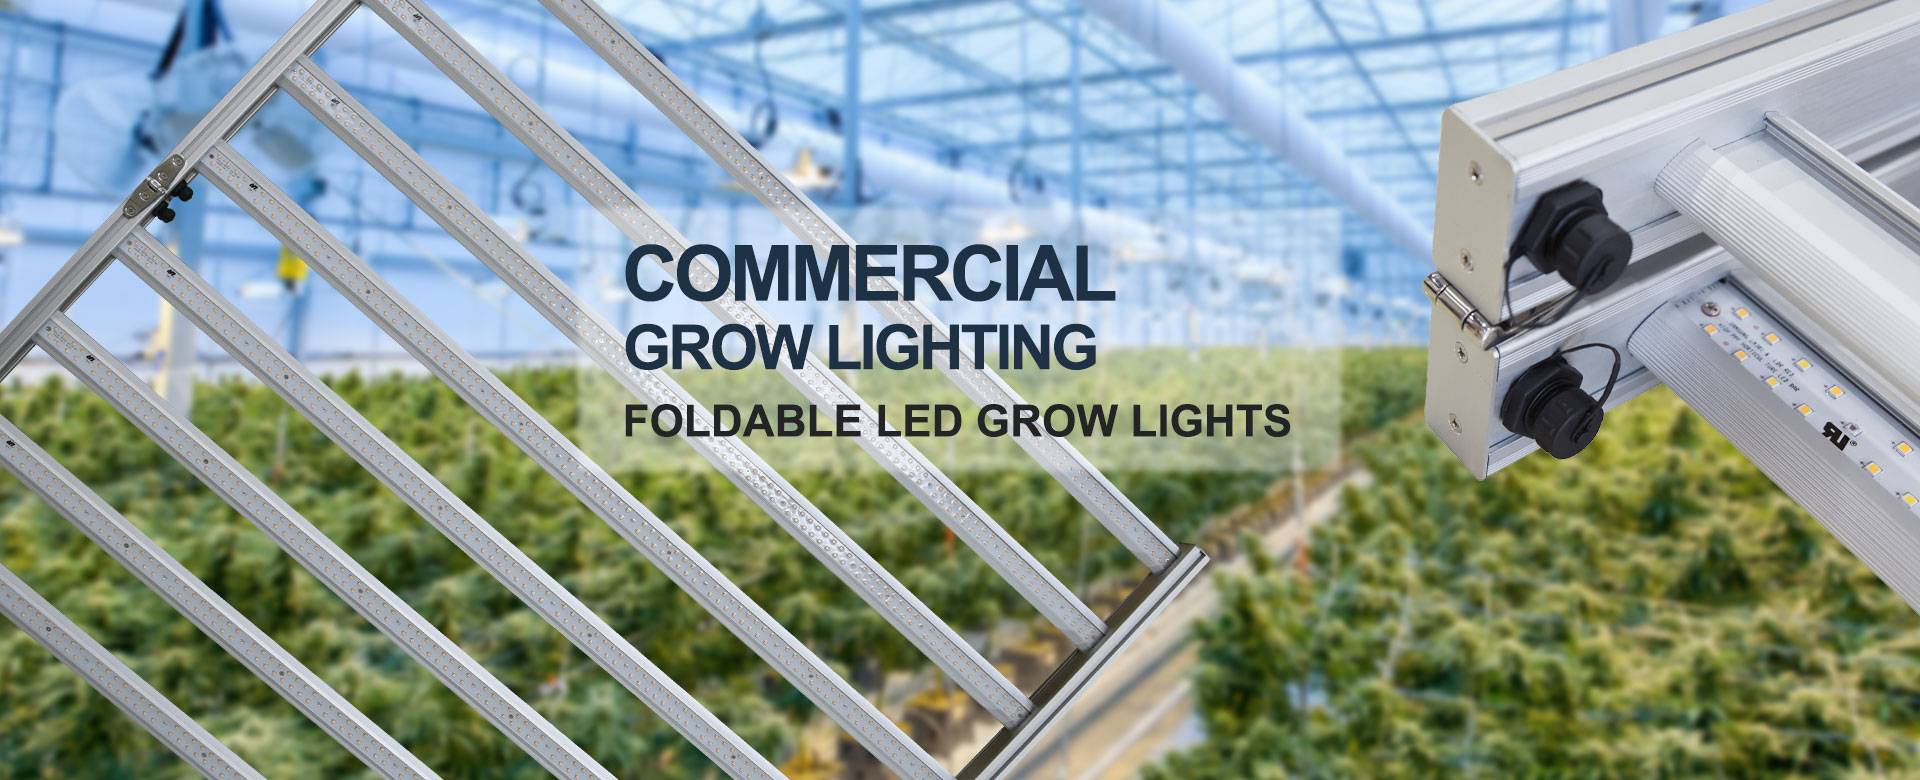 led grow light